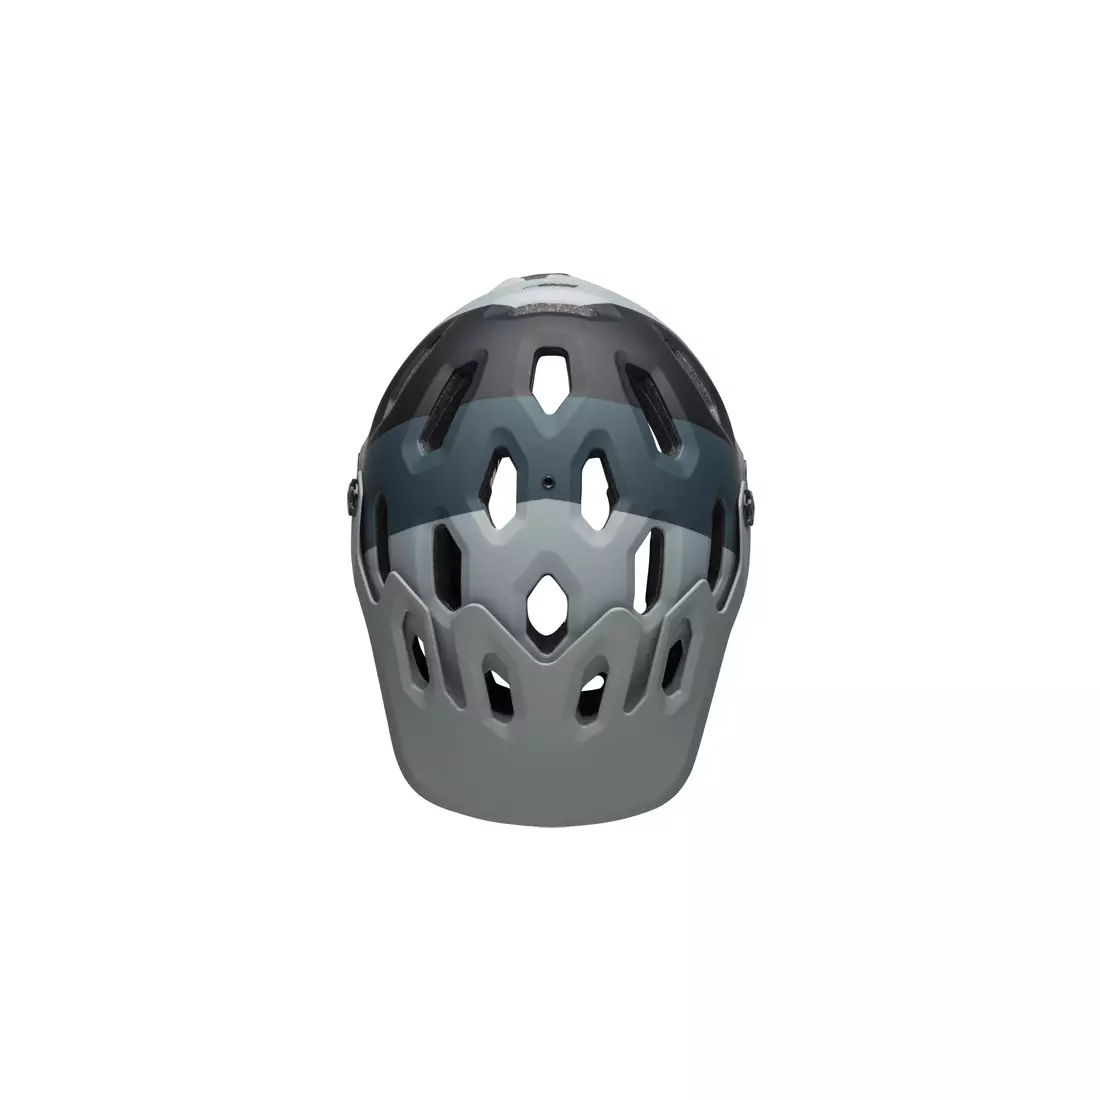 Cyklistická prilba full face, odnímateľná čeľusť BELL SUPER 3R MIPS downdraft matte gray gunmetal